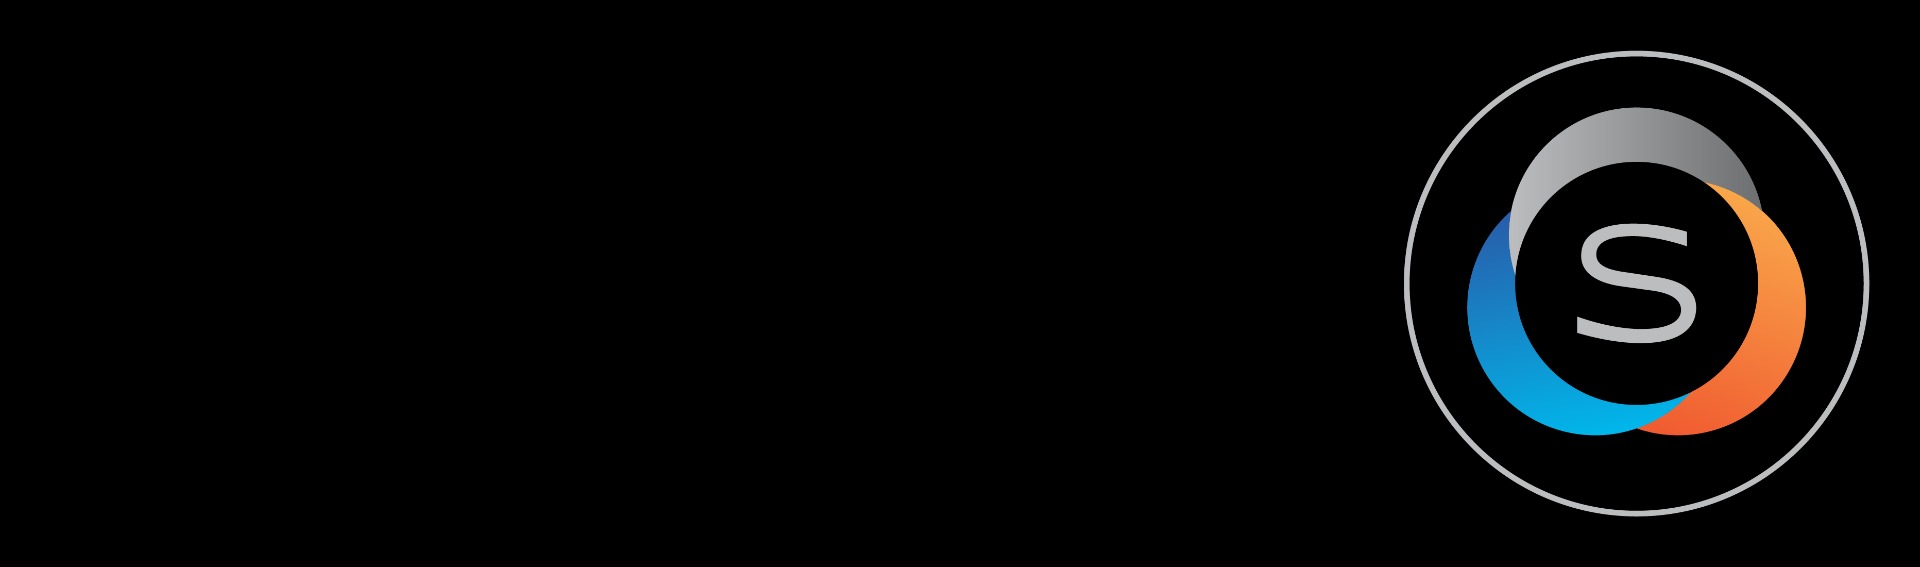 SV_logo_6_RGB